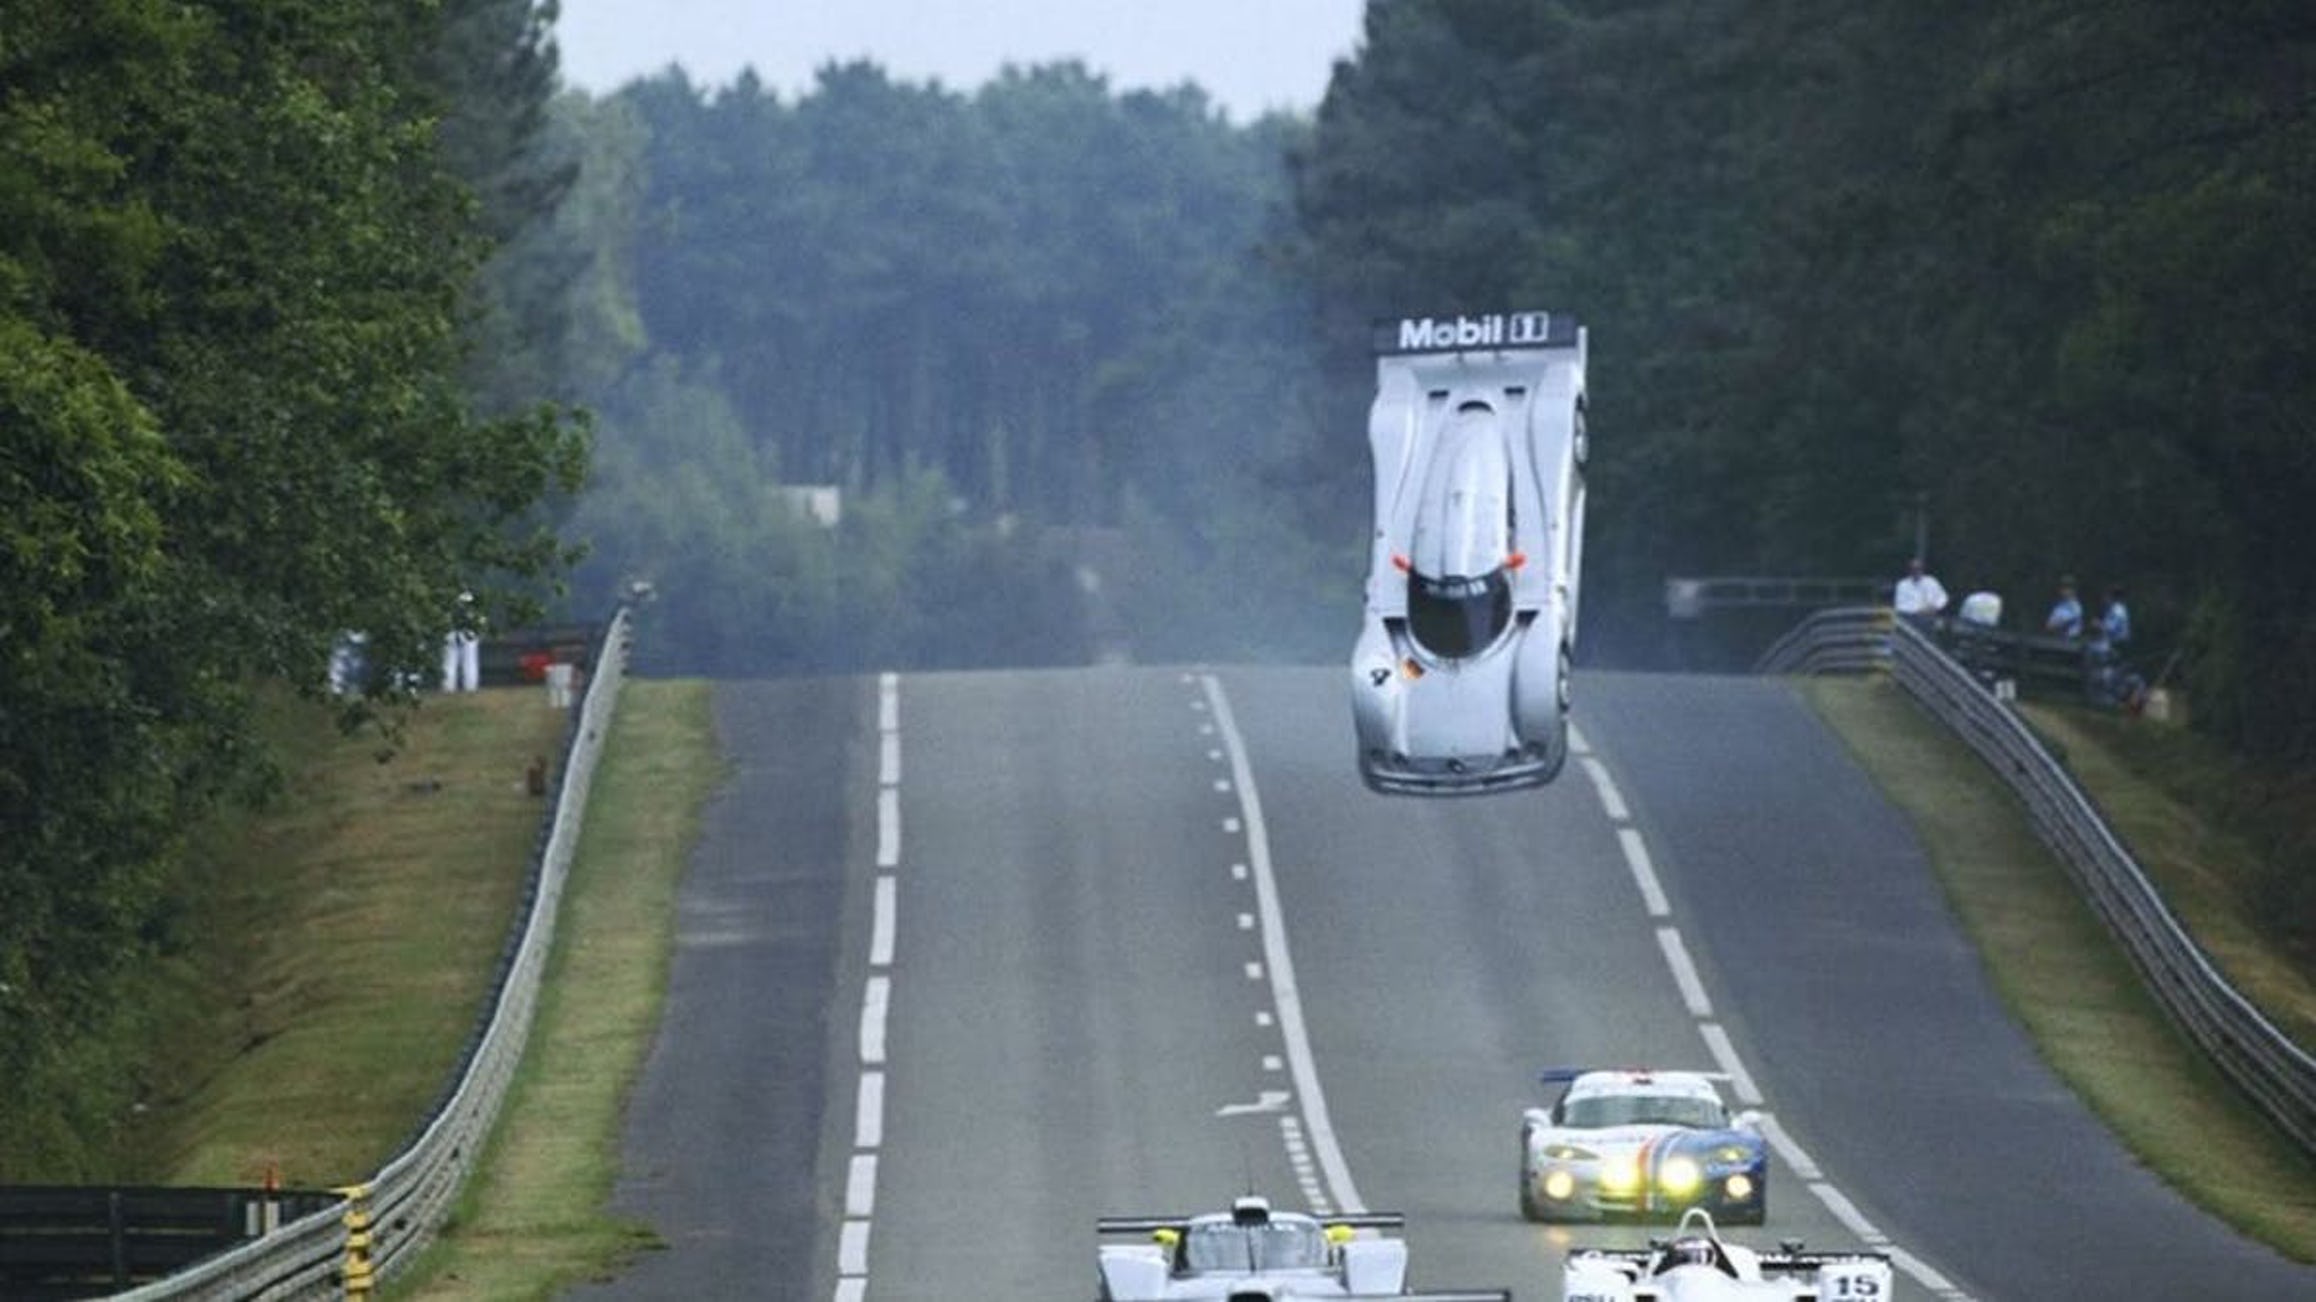 1999 Mercedes CLR flip at Le Mans